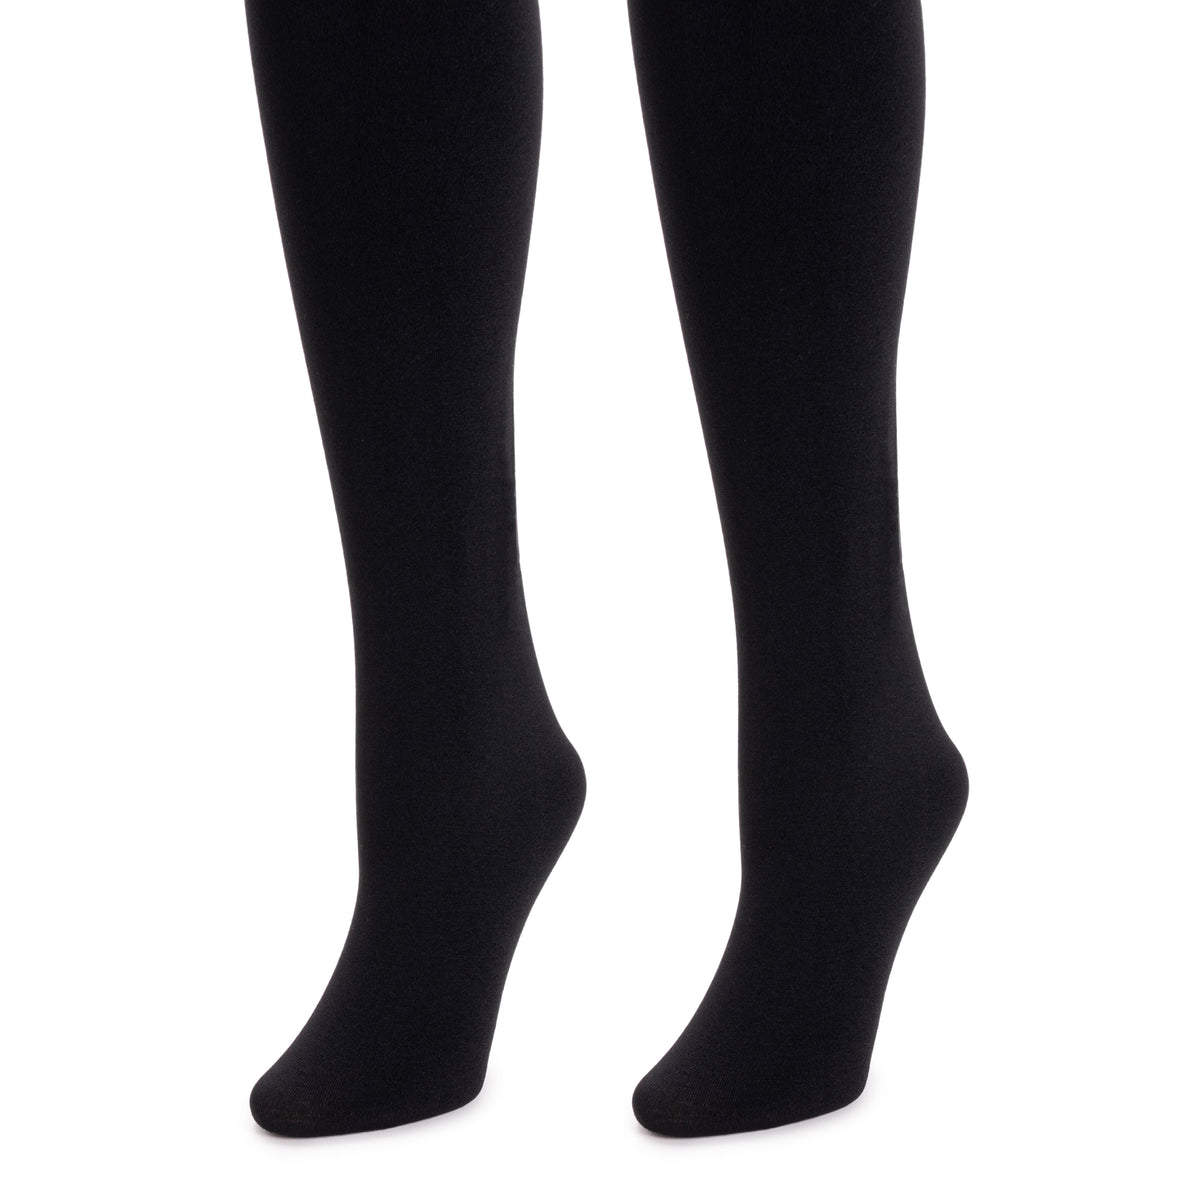 MUK LUKS Womens Fleece Lined Leggings, Black Rib, Large/X Large 